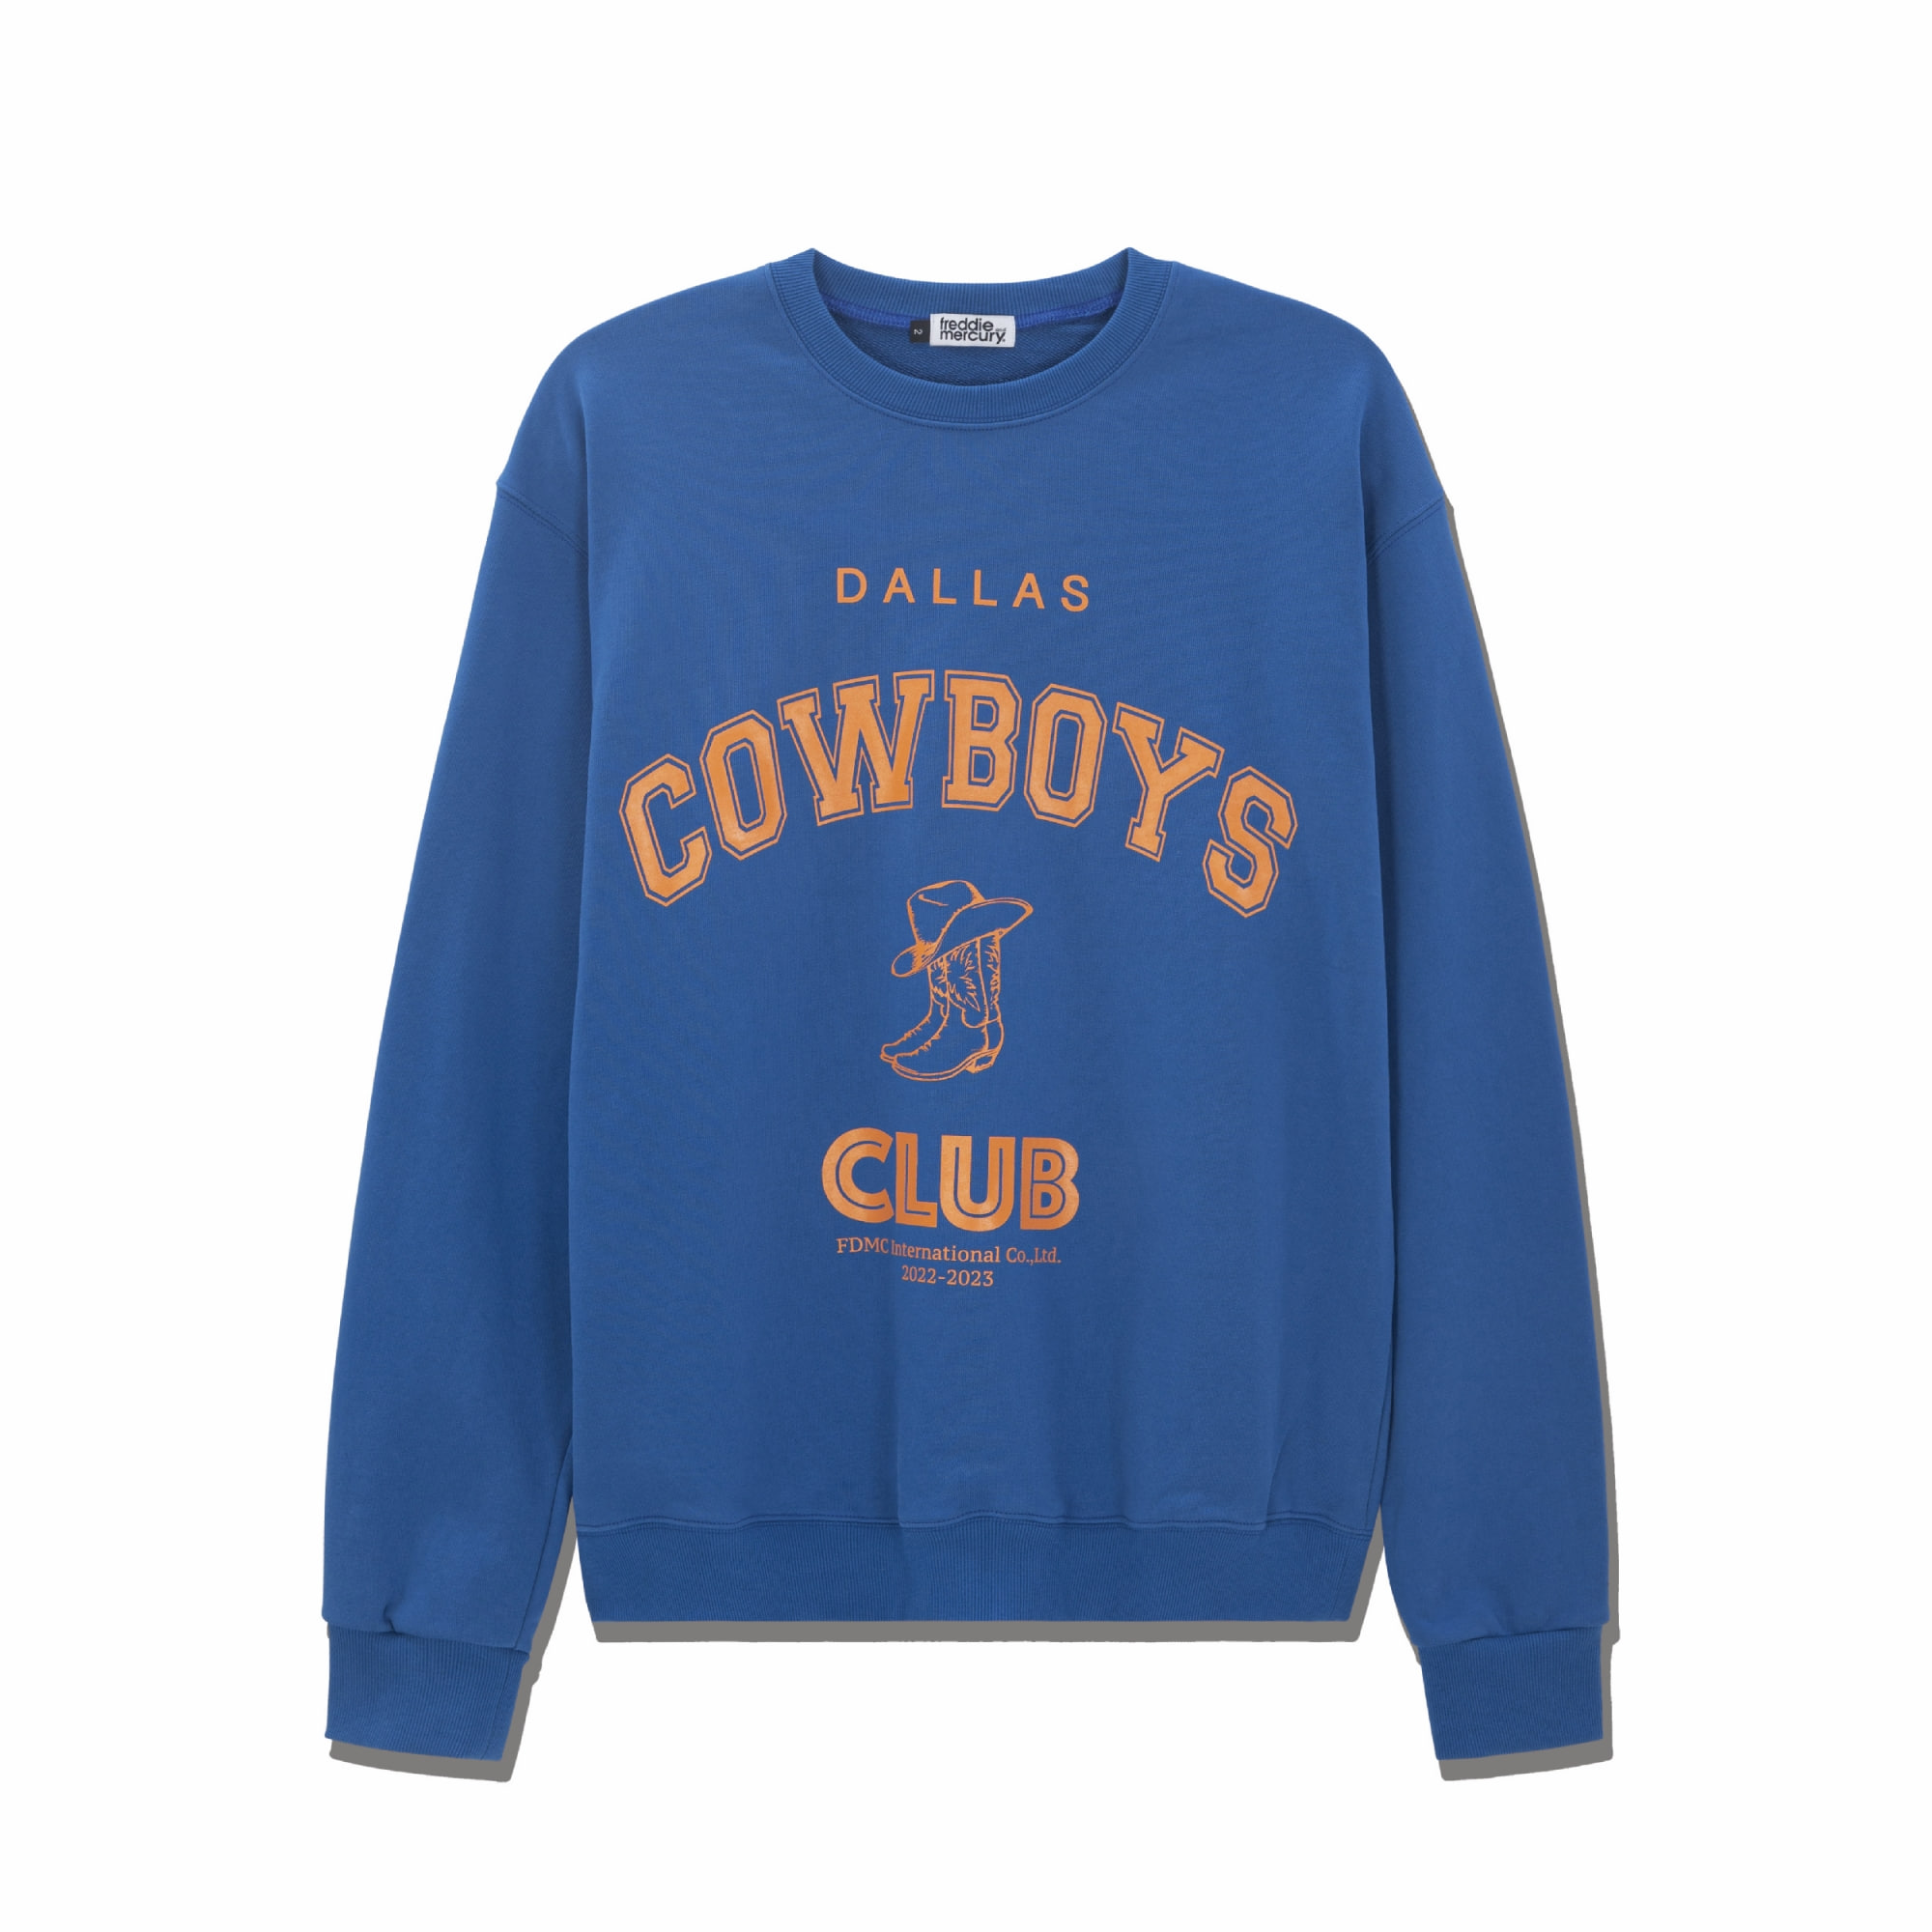 [SOLD OUT] DALLAS COWBOYS CLUB (BLUE)